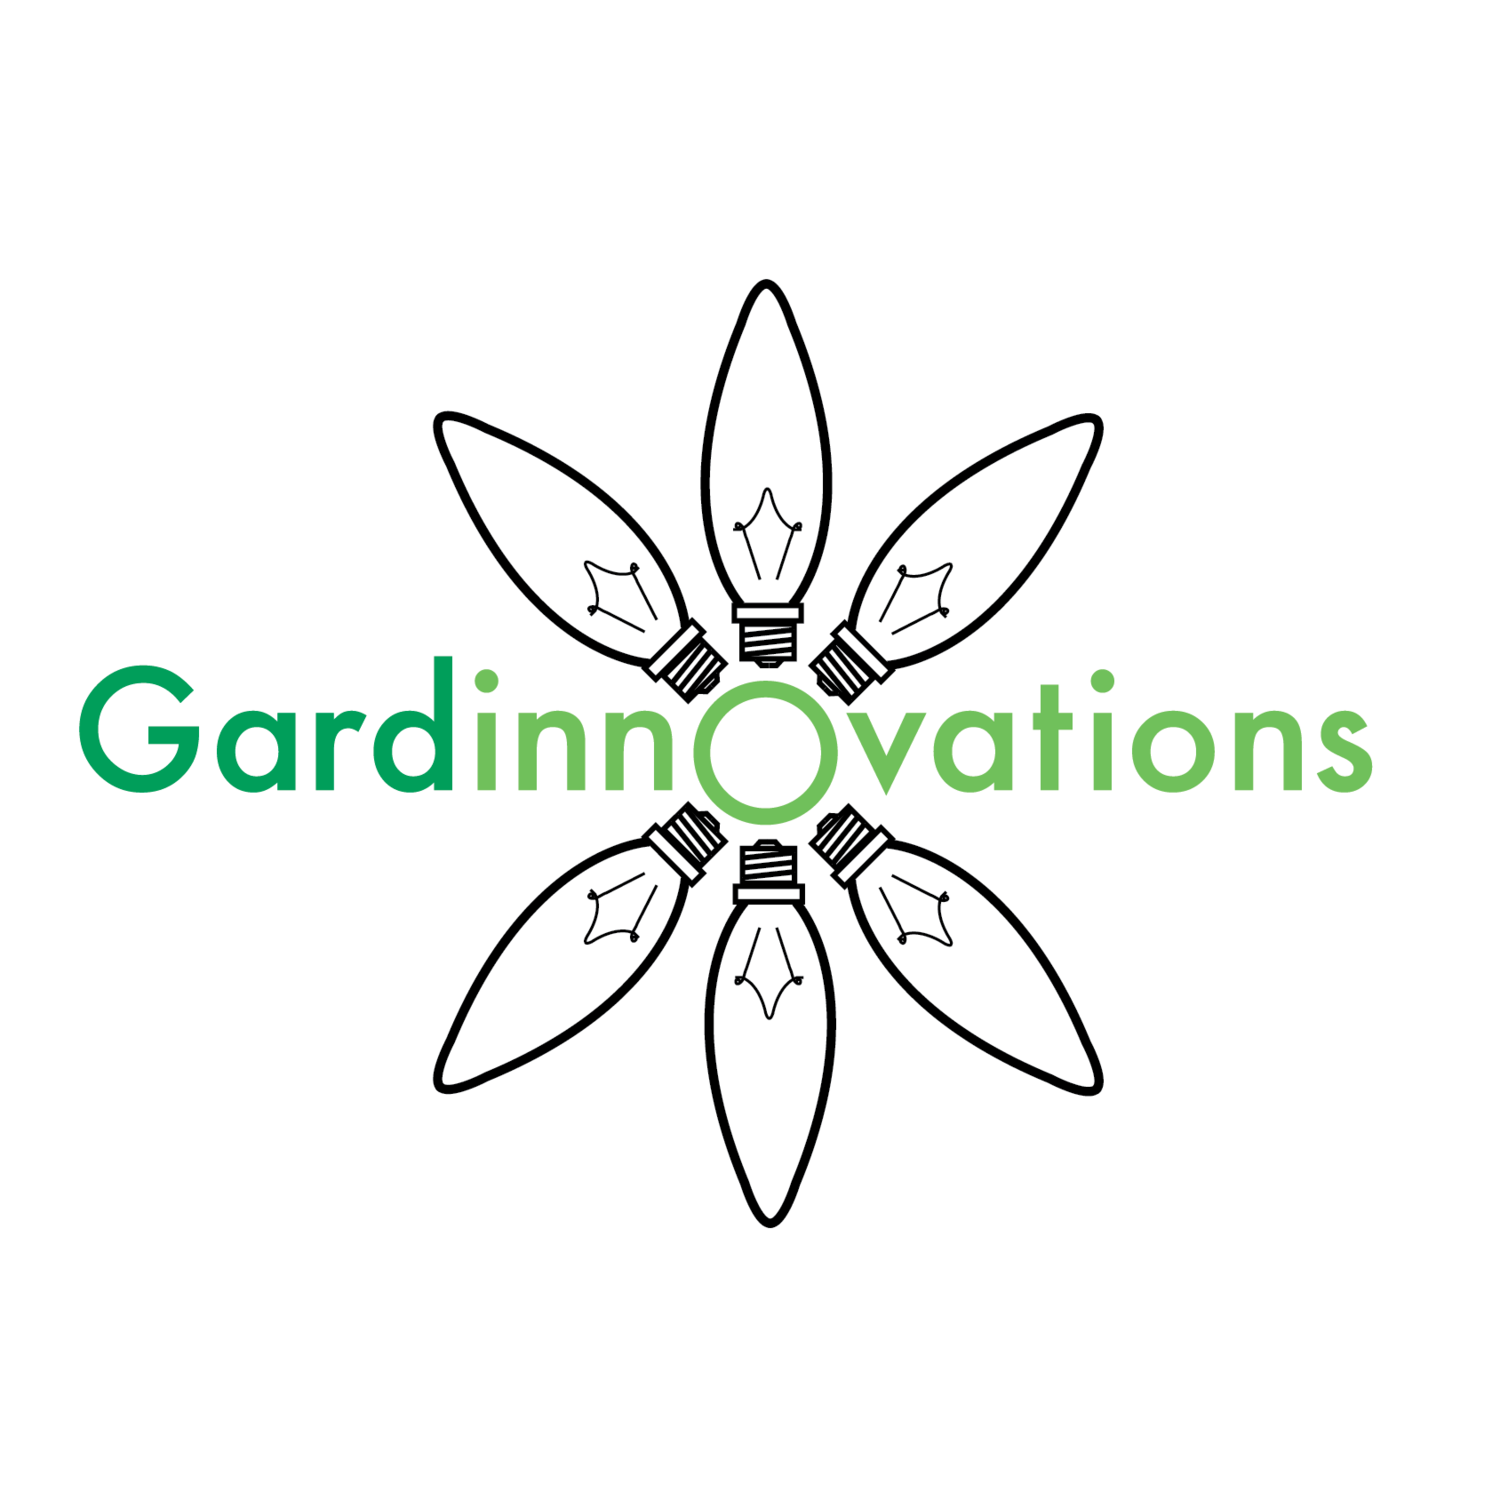 Gardenframe Garden Kit Gardinnovations - Circle (1500x1500)